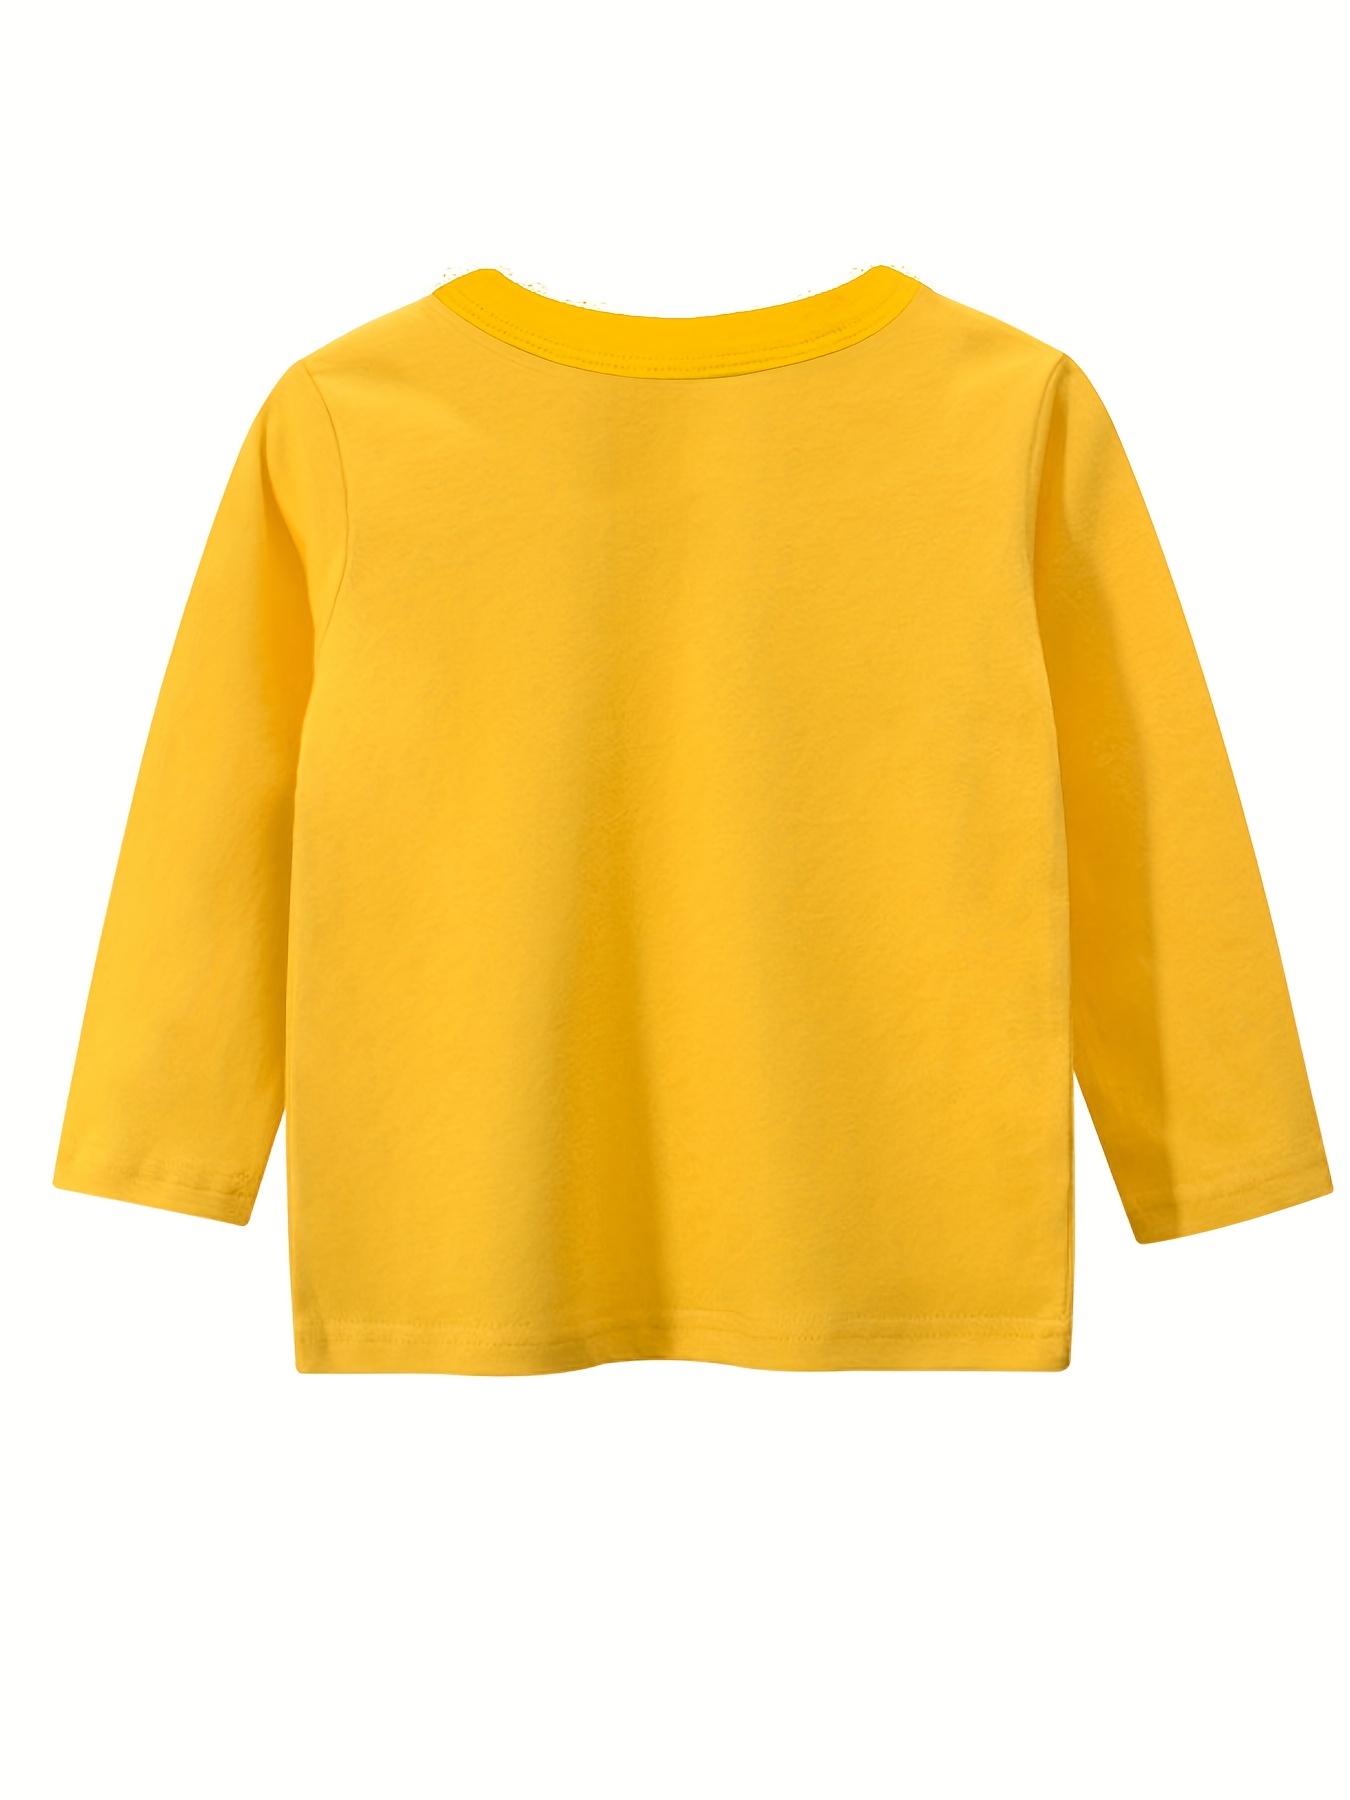 Camiseta de manga larga en algodón amarilla para niño